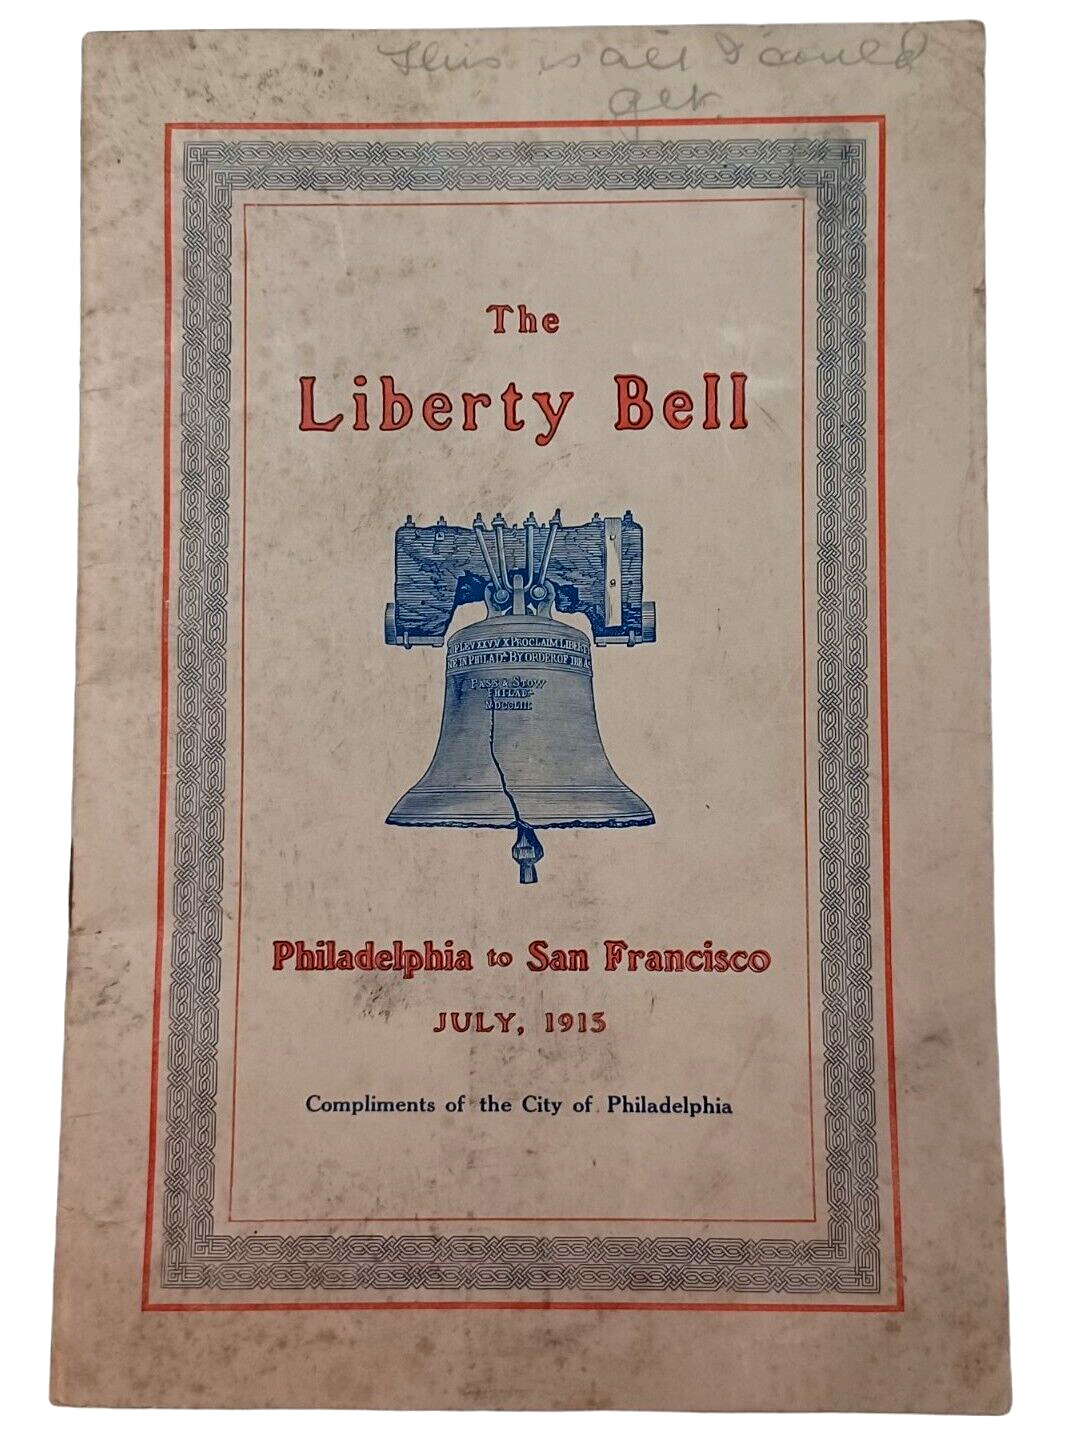 Original 1915 Liberty Bell Philadelphia to San Francisco booklet